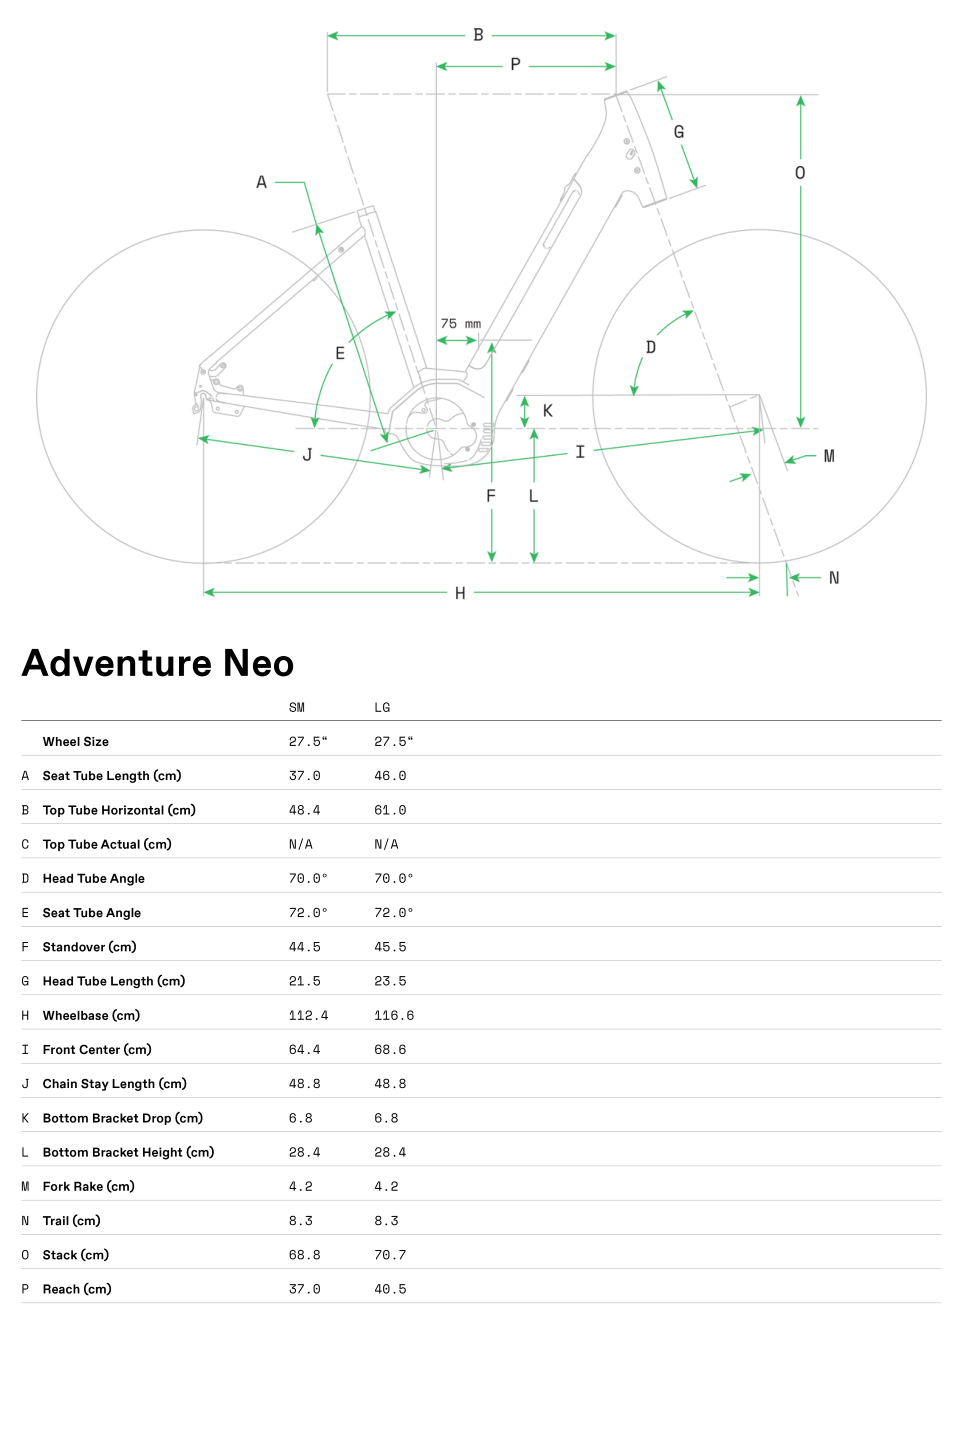 Geometrie Adventure Neo